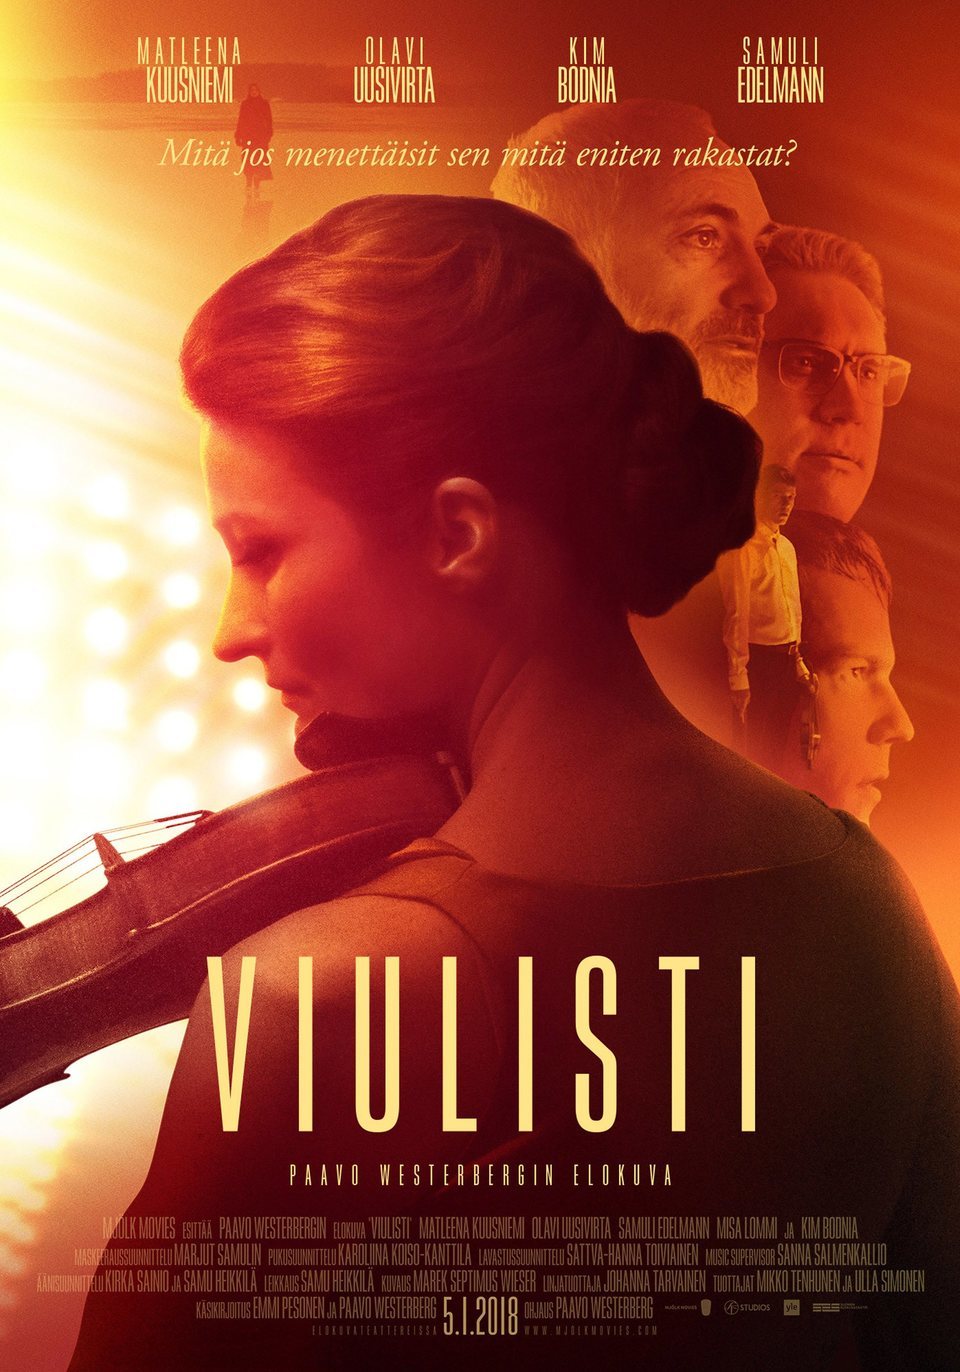 Poster of The Violin Player - Finlandia